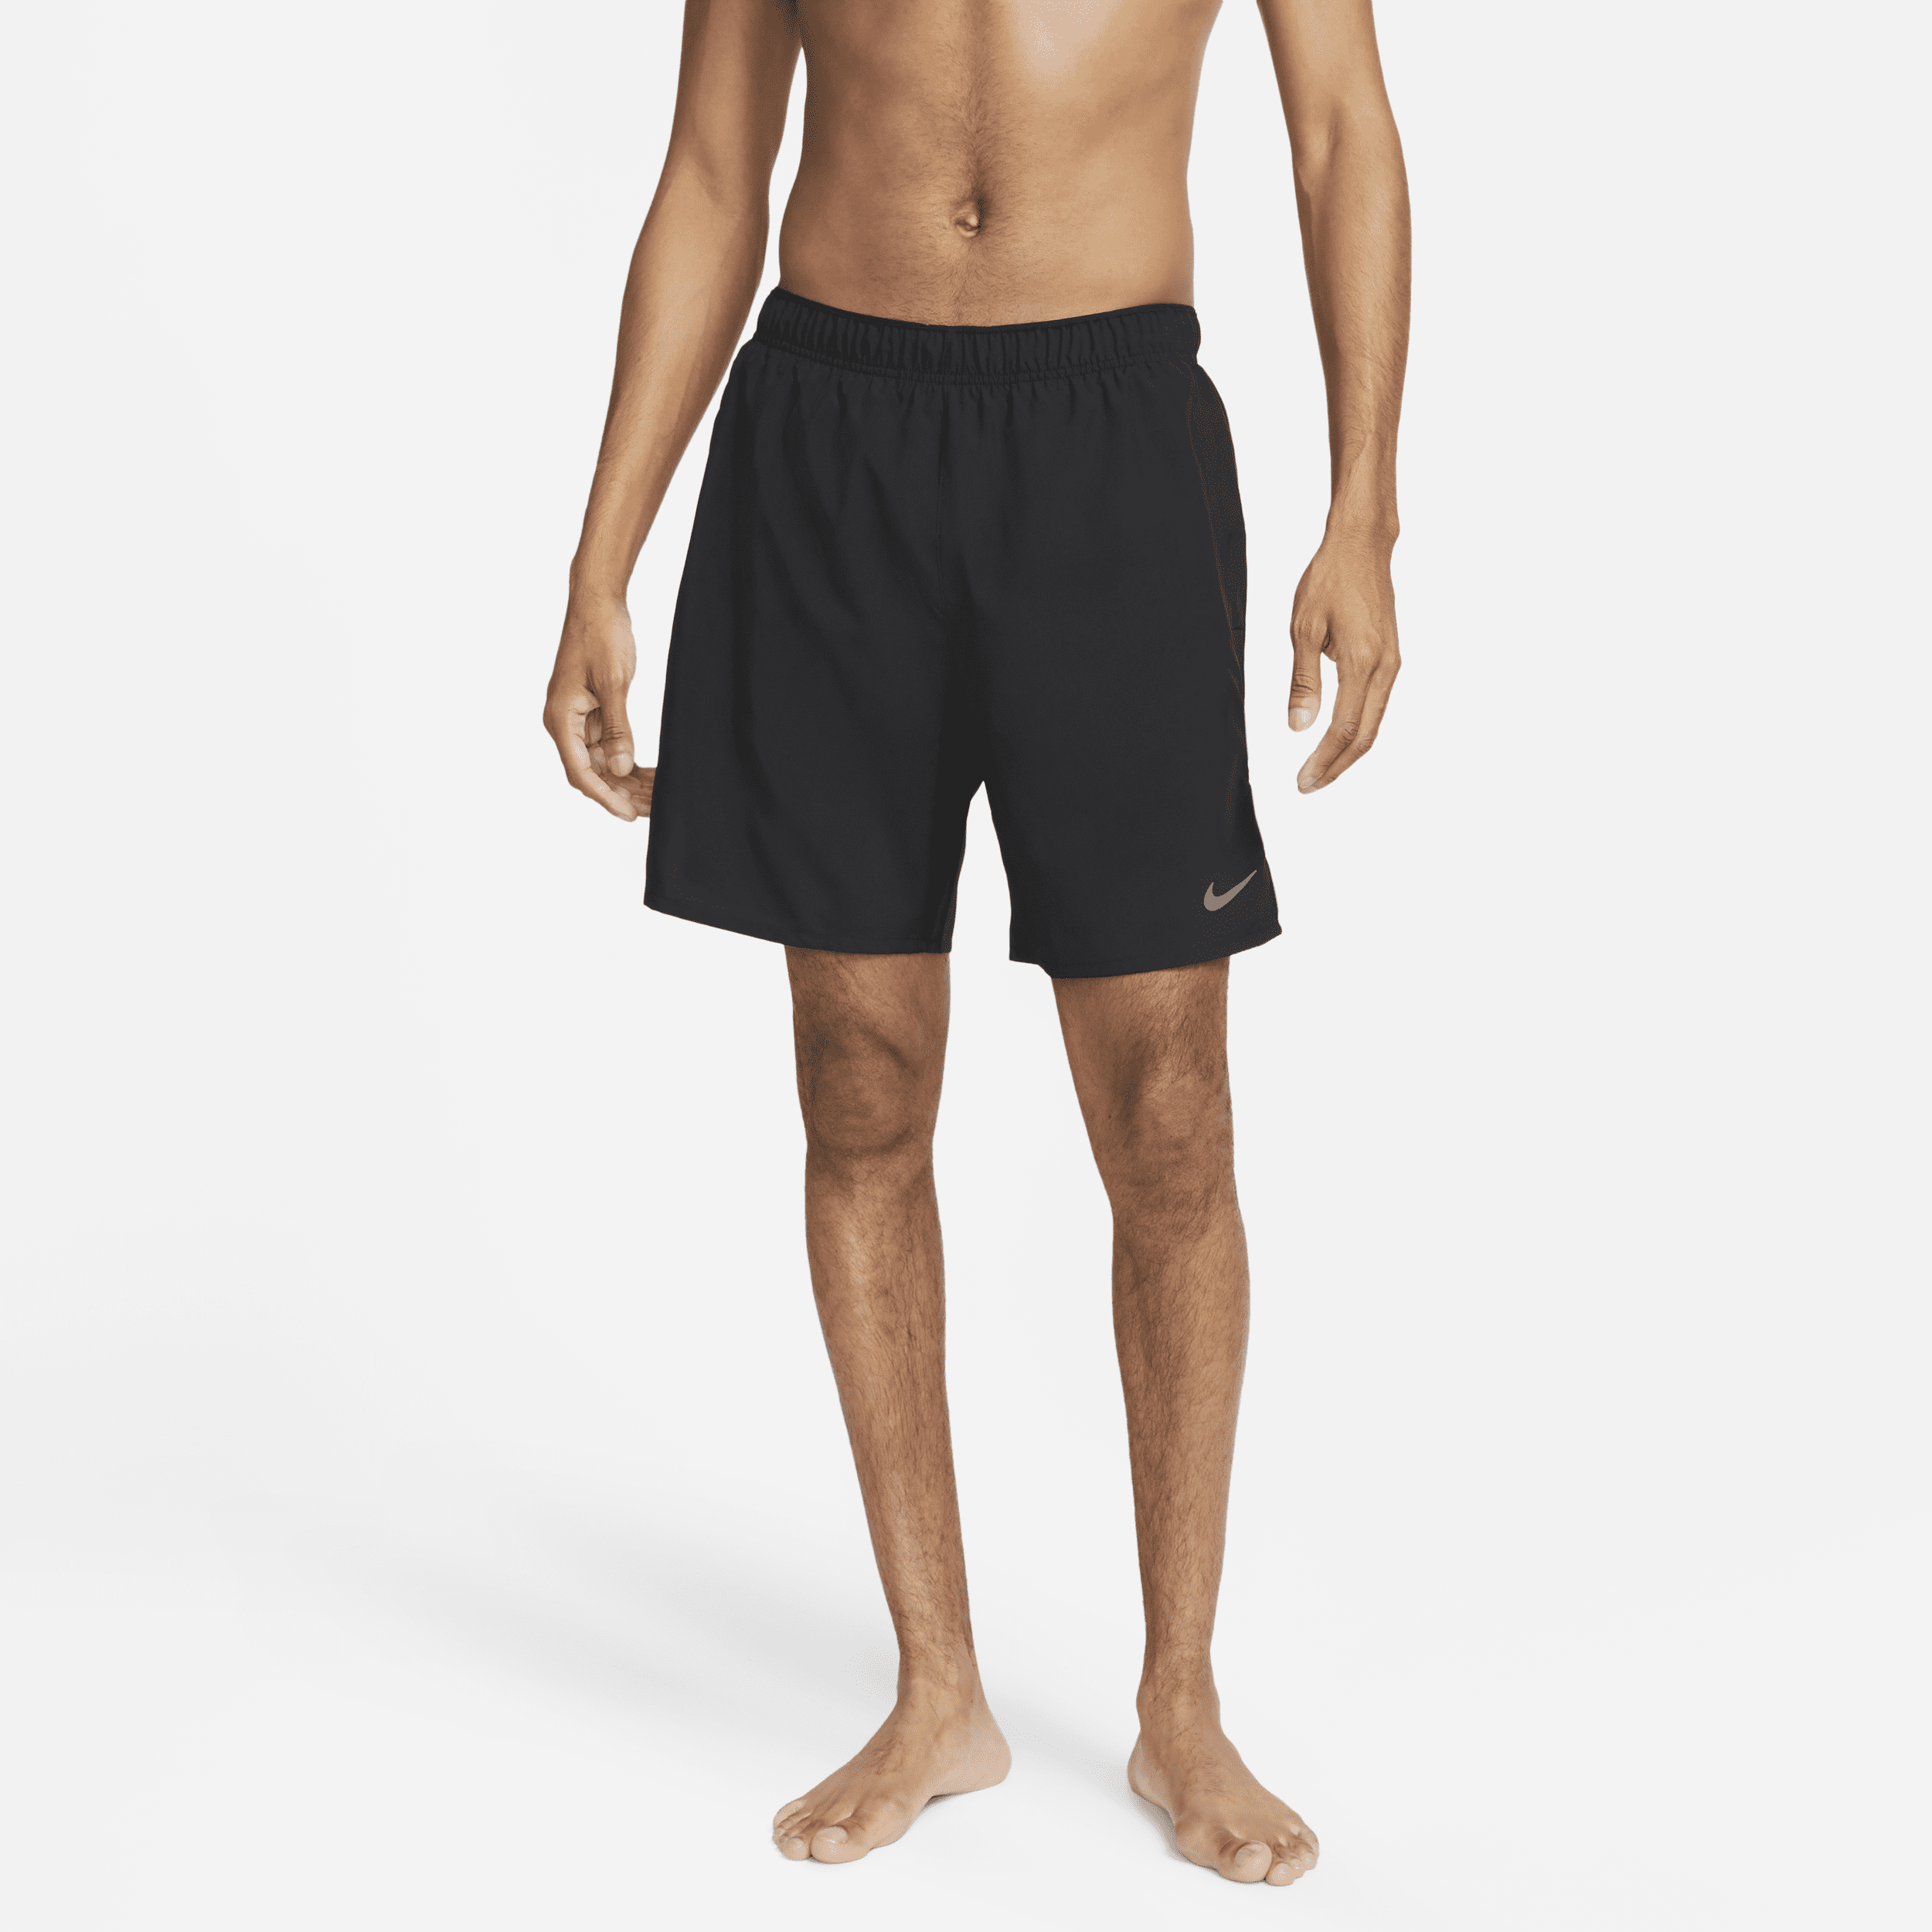 Shorts da running Dri-FIT 2 in 1 18 cm Nike Challenger – Uomo - Nero